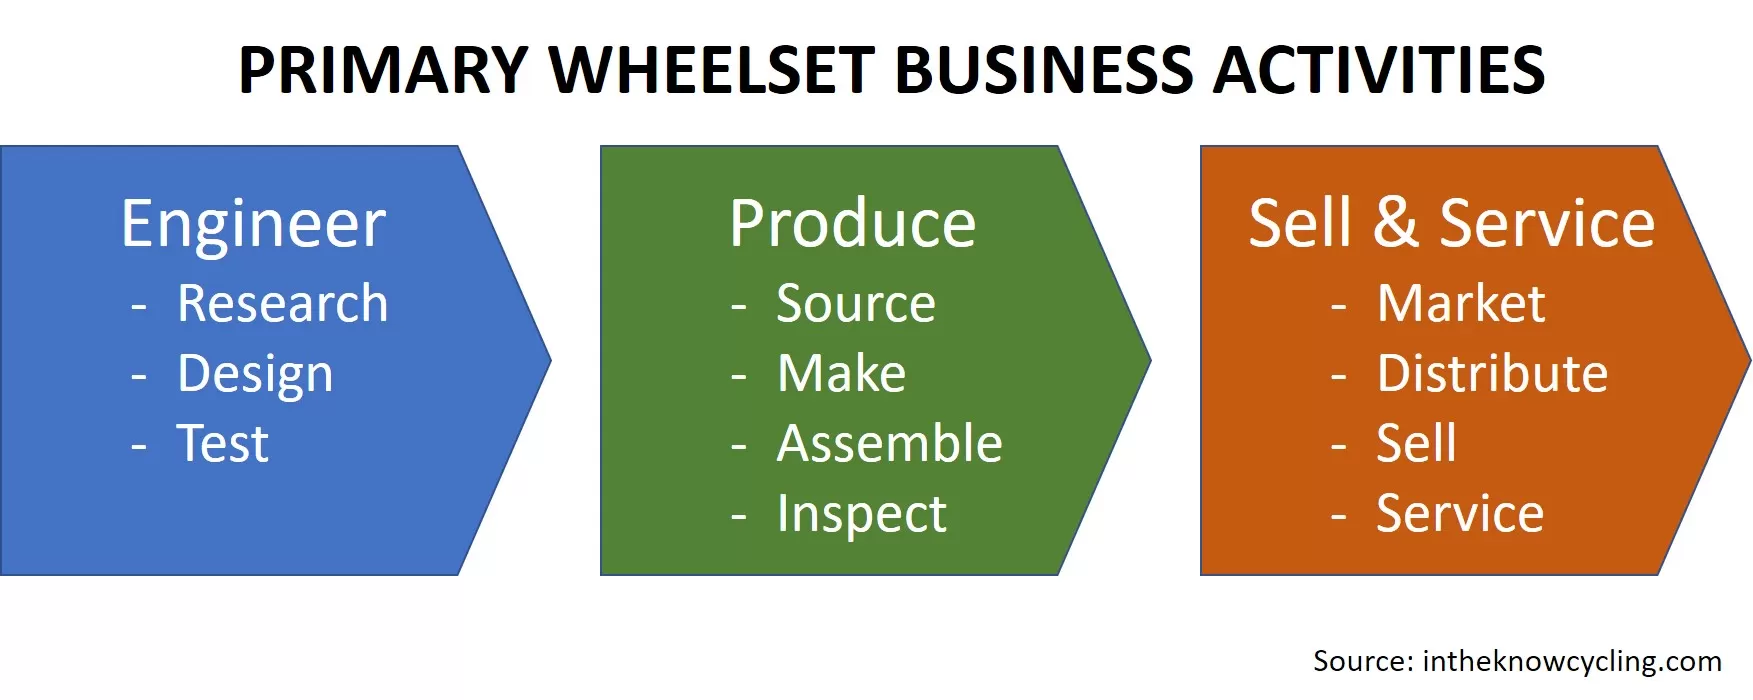 Primary Wheelset Business Activities